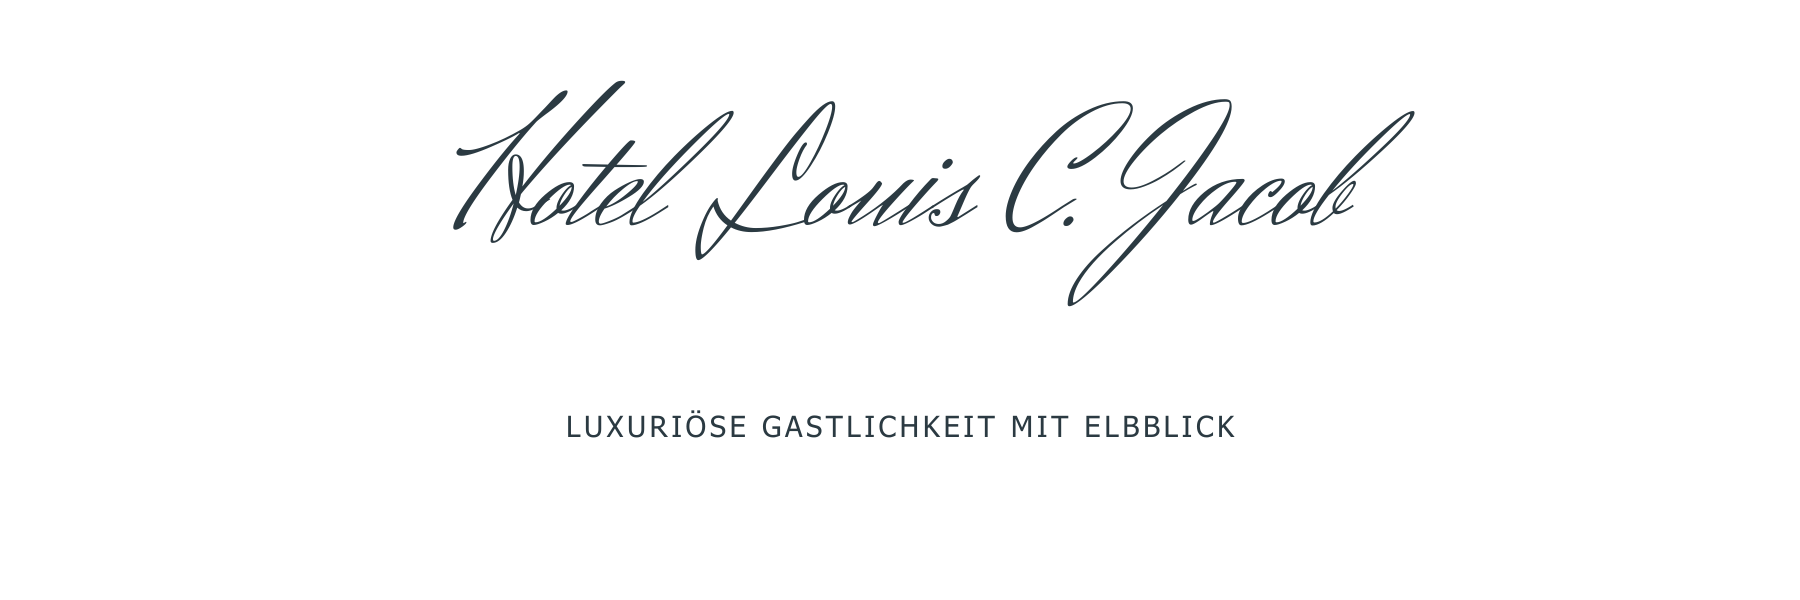 Hotel Louis C. Jacob Hamburg